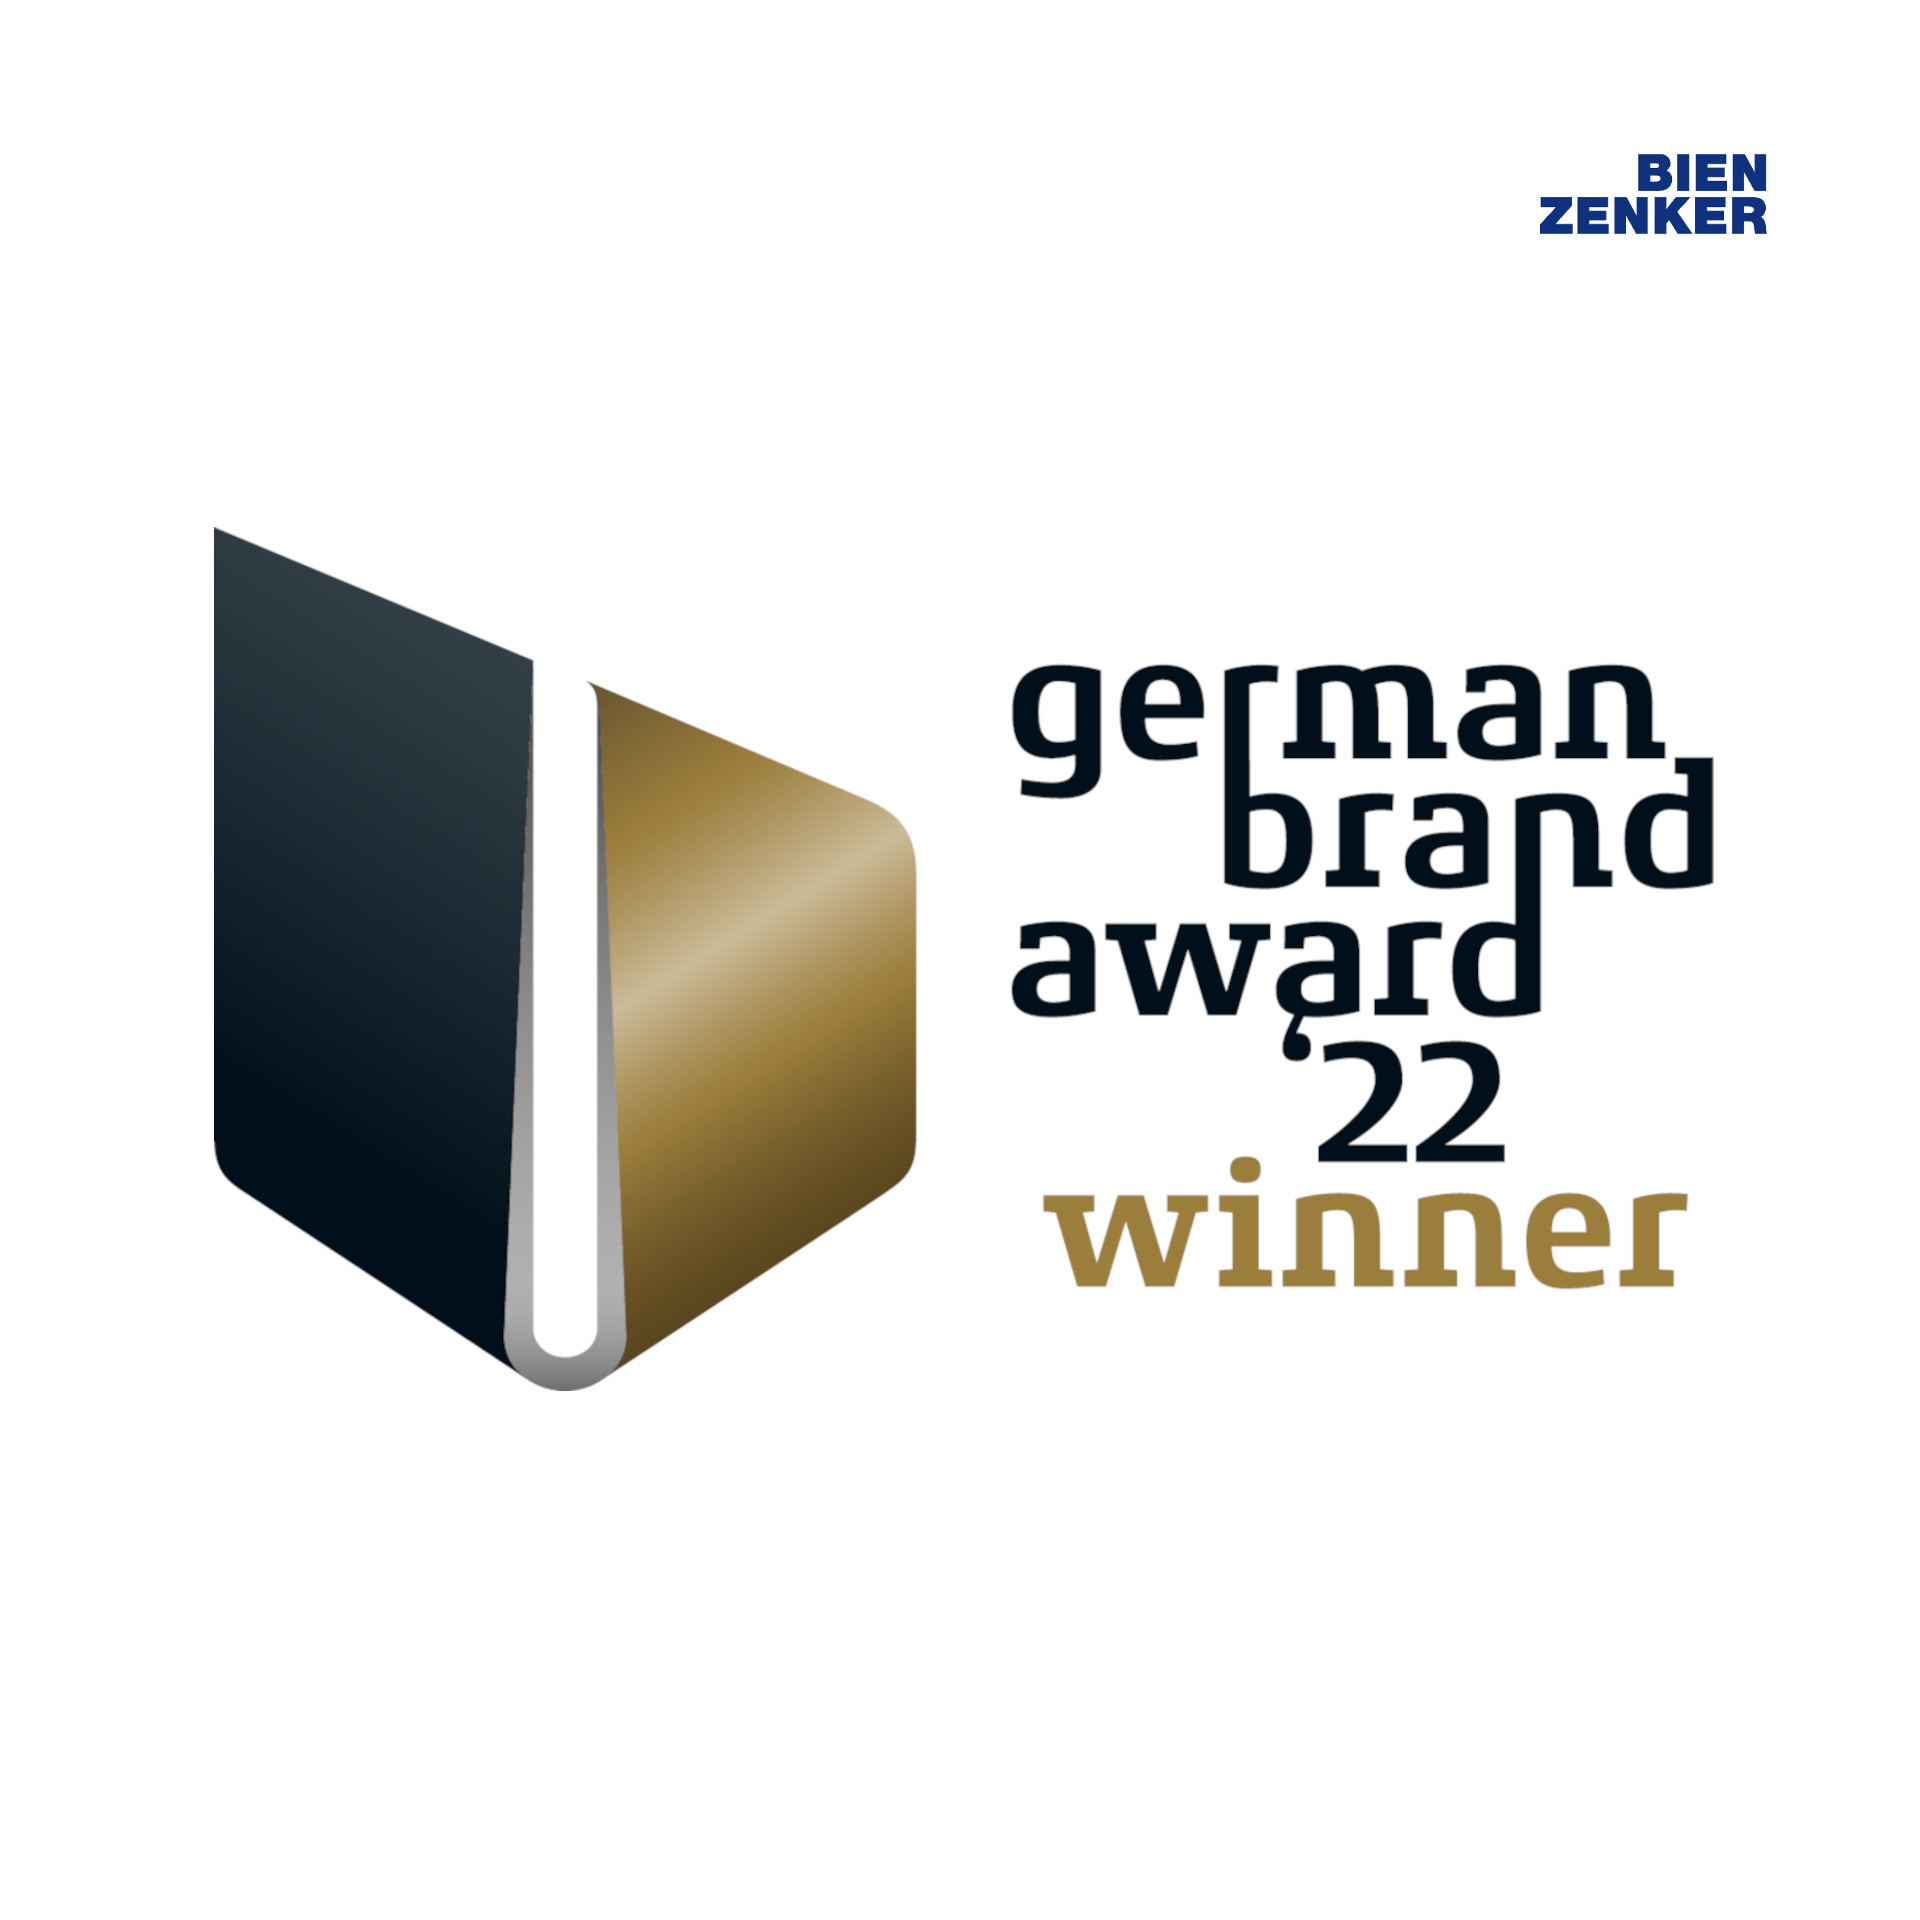 Bien-Zenker wieder preisgekrönt beim German Brand Award 2022 